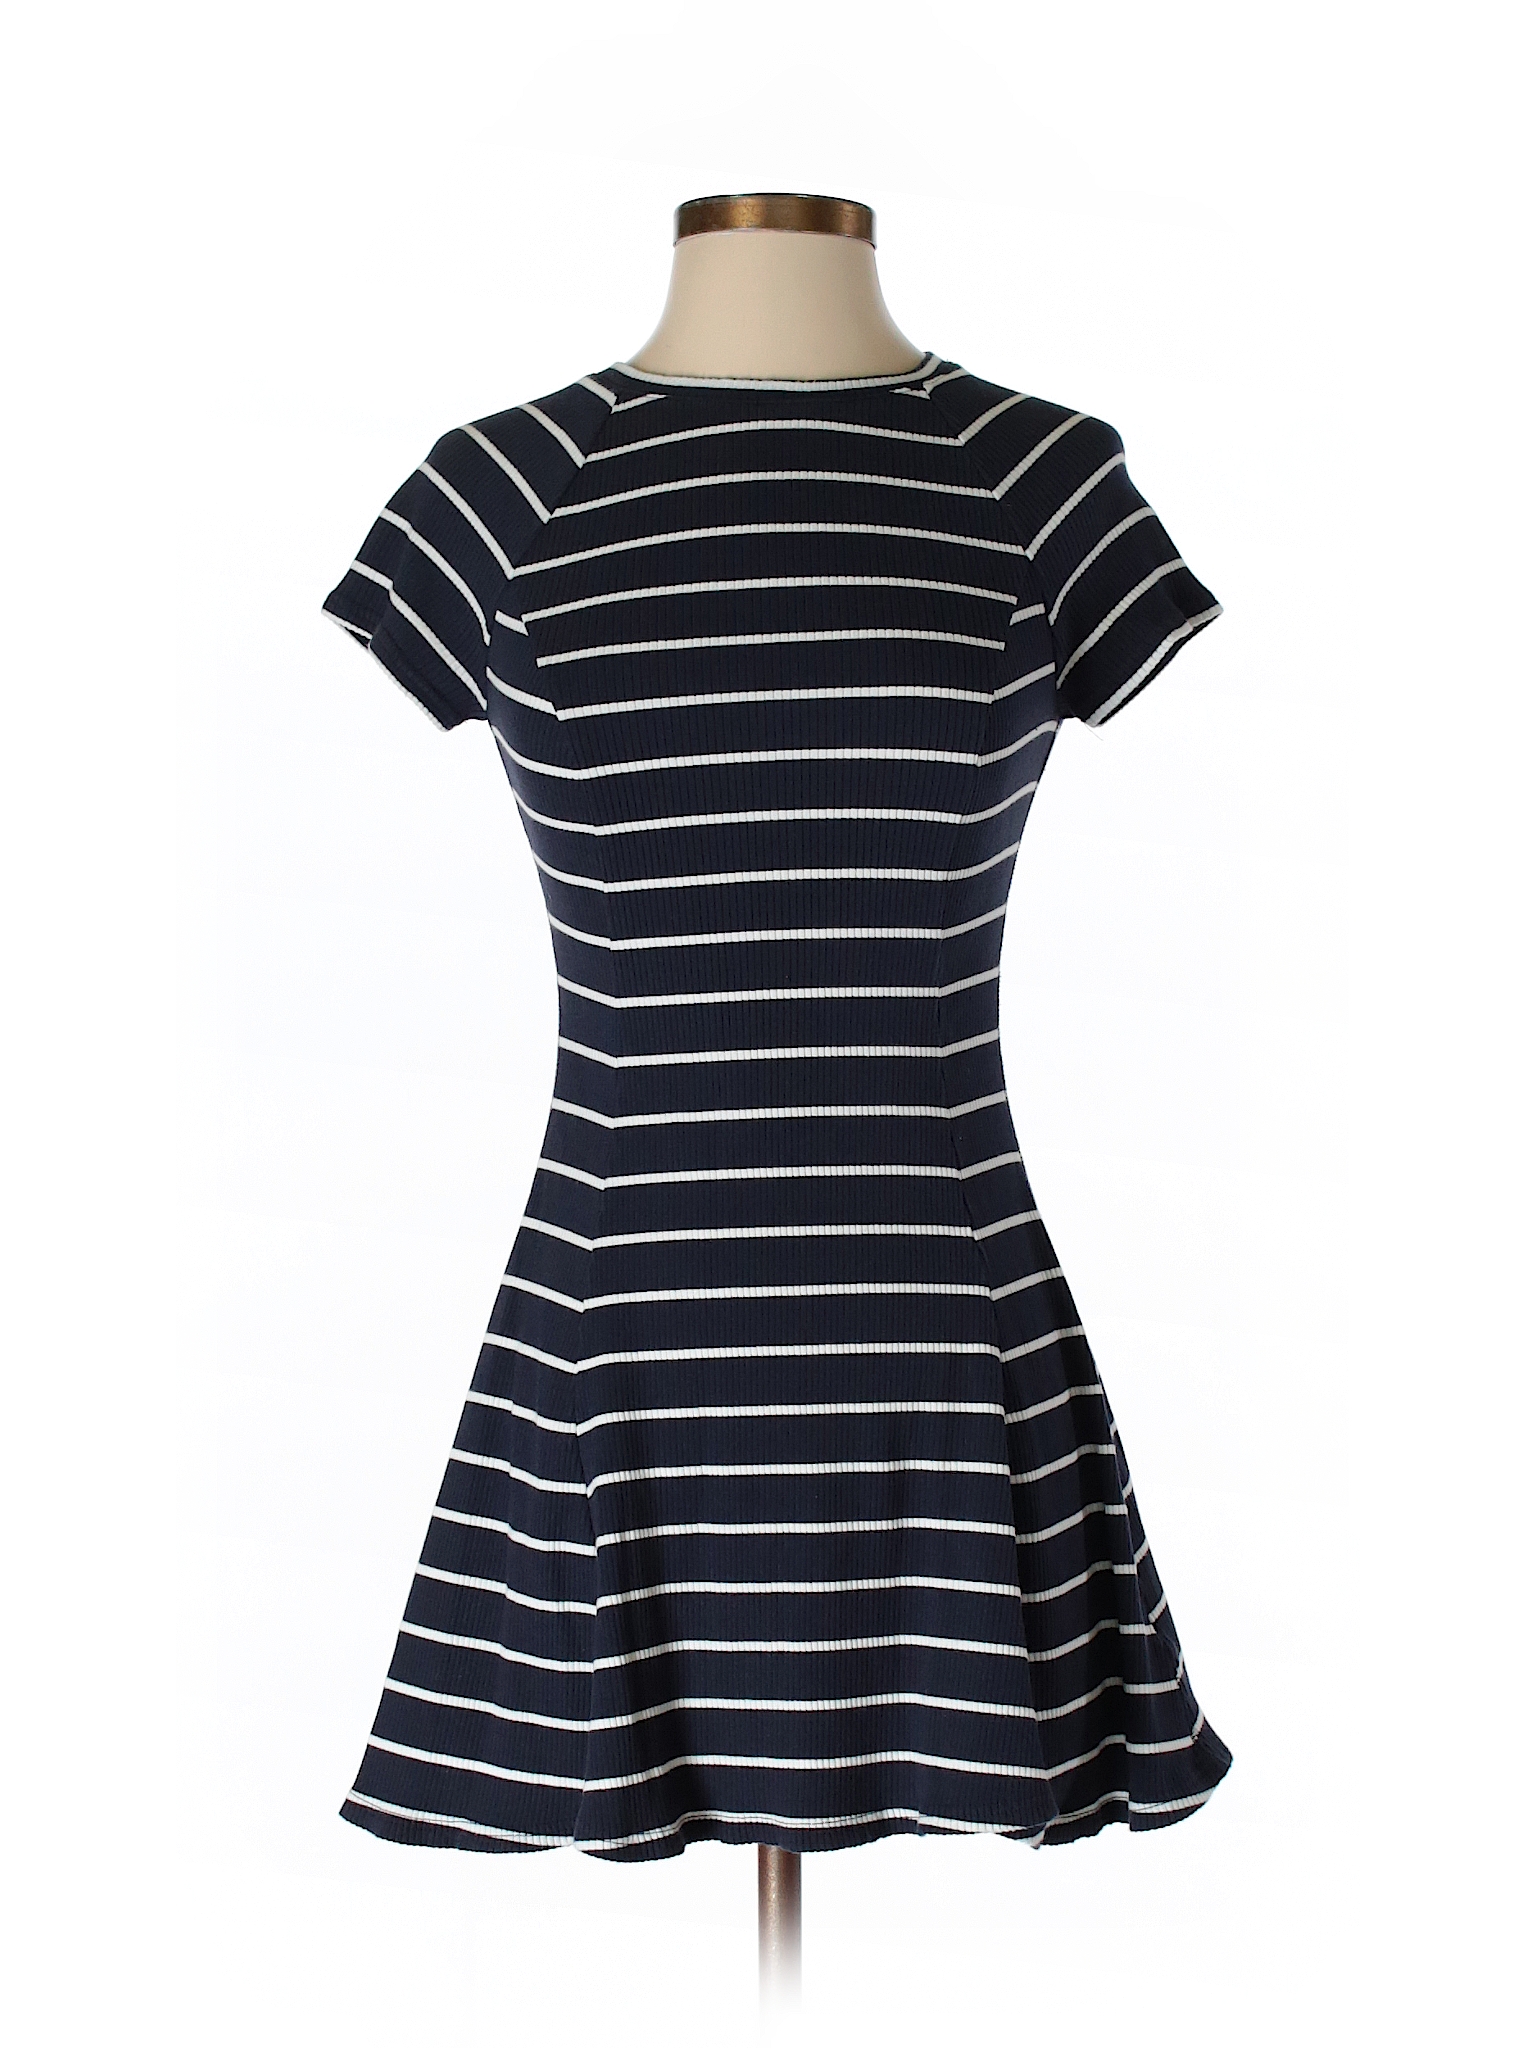 BDG Stripes Navy Blue Casual Dress Size S - 70% off | thredUP